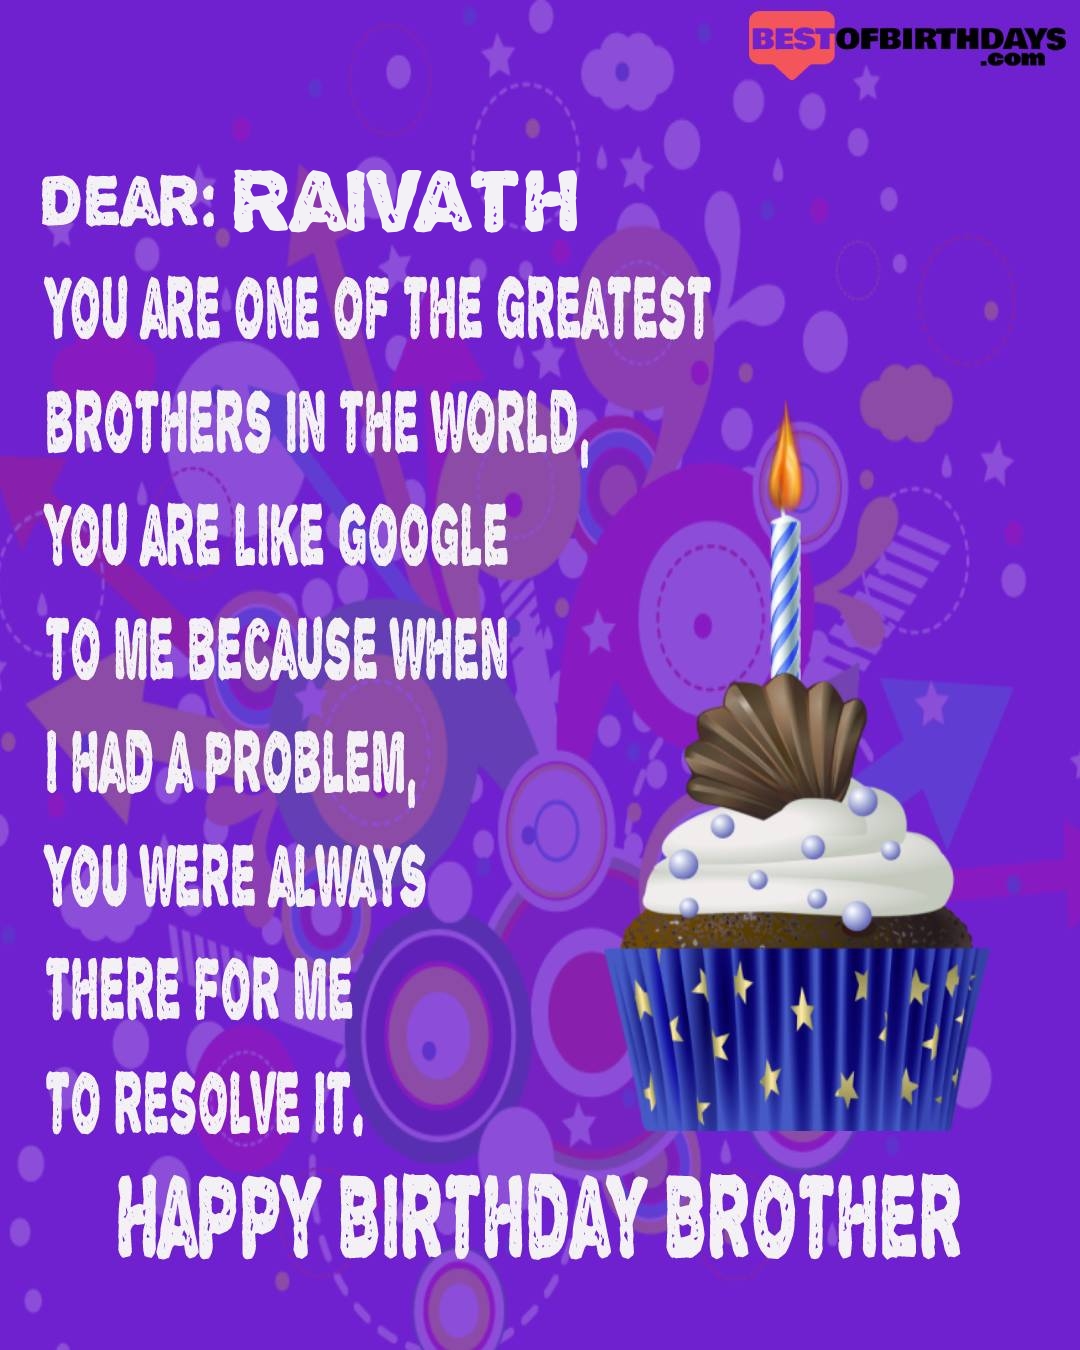 Happy birthday raivath bhai brother bro